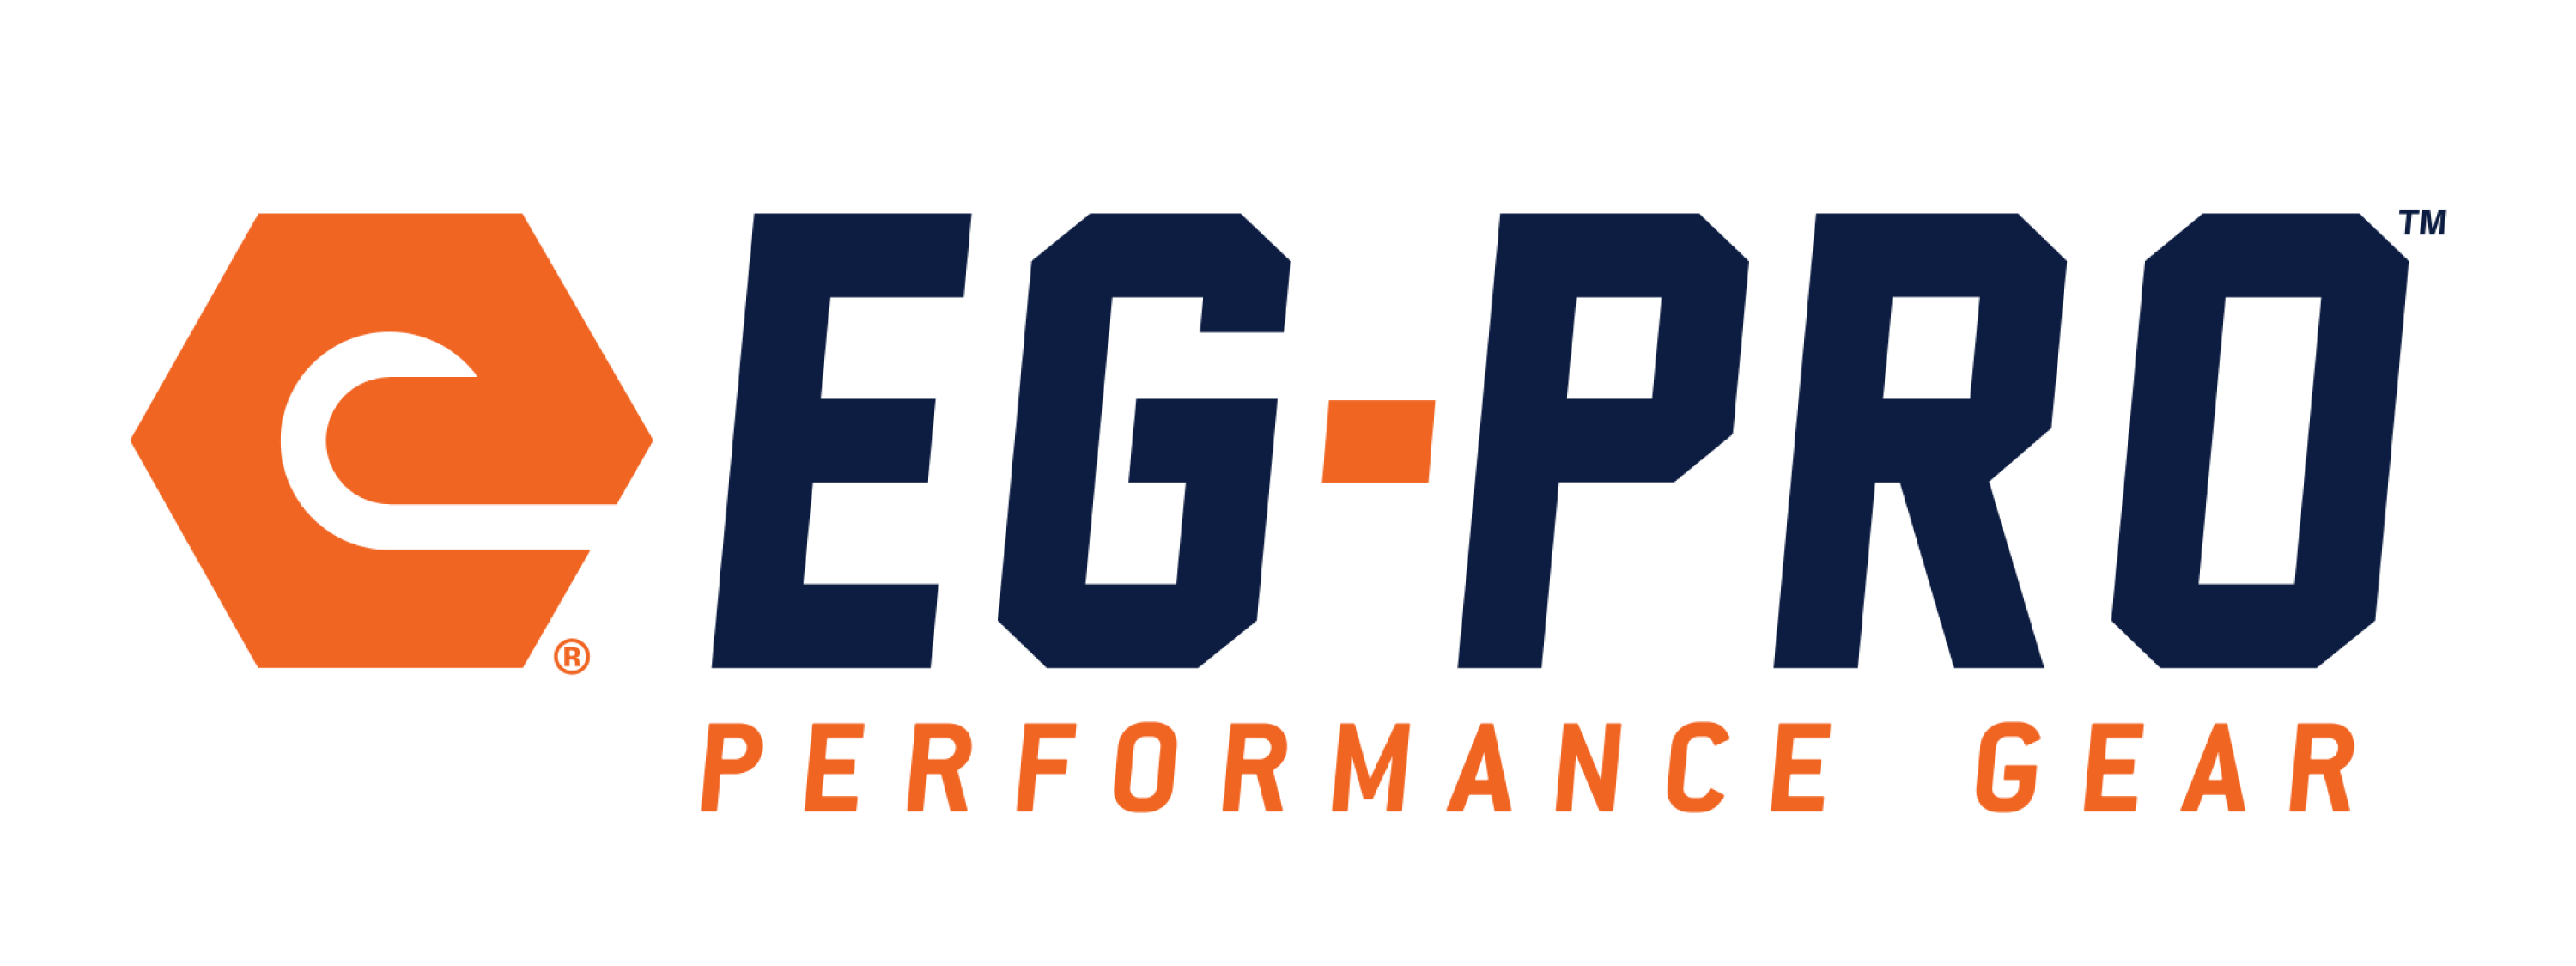 egpro_logo